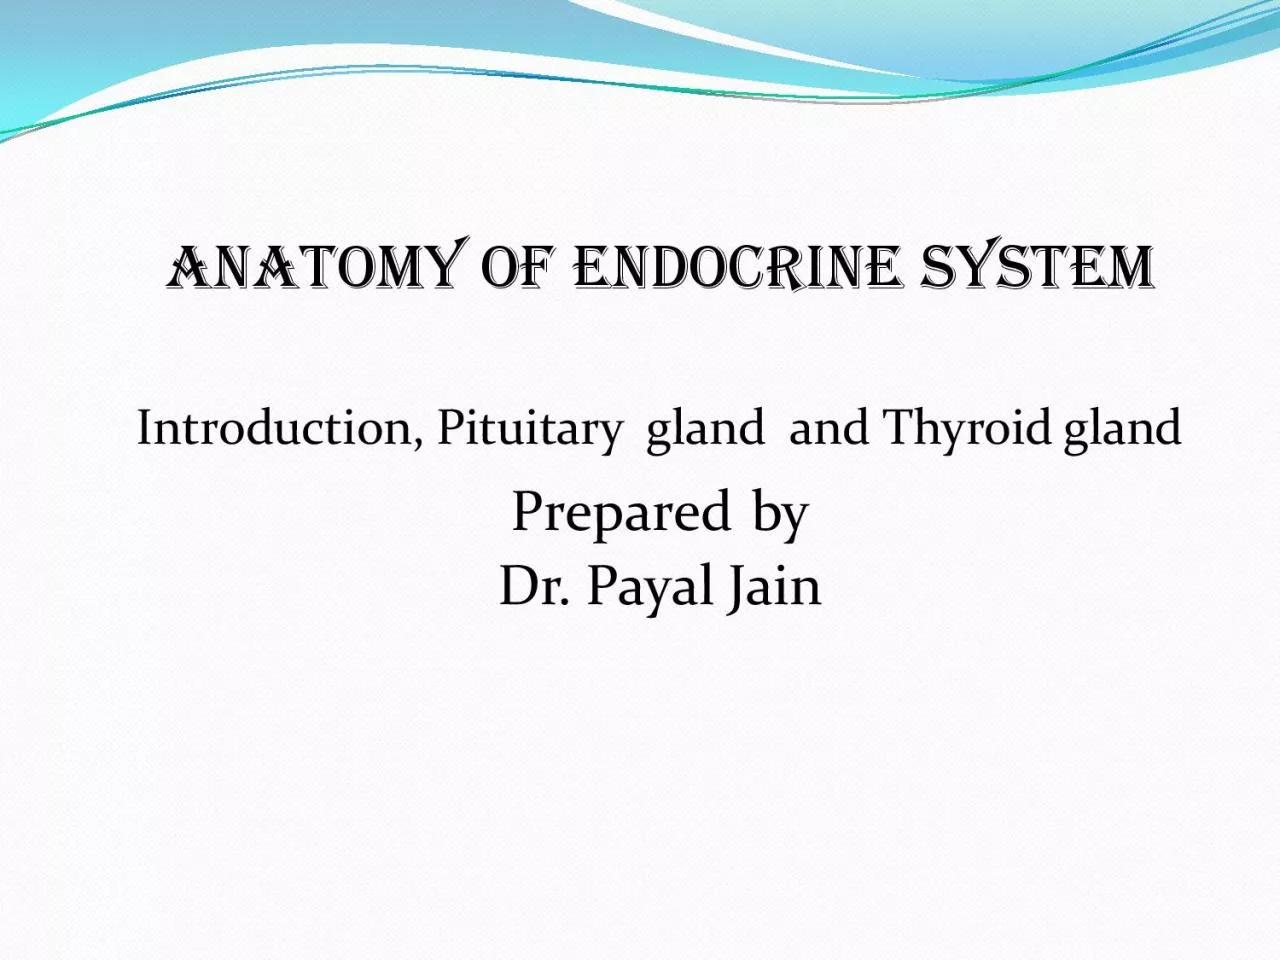 Anatomy of Endocrine system